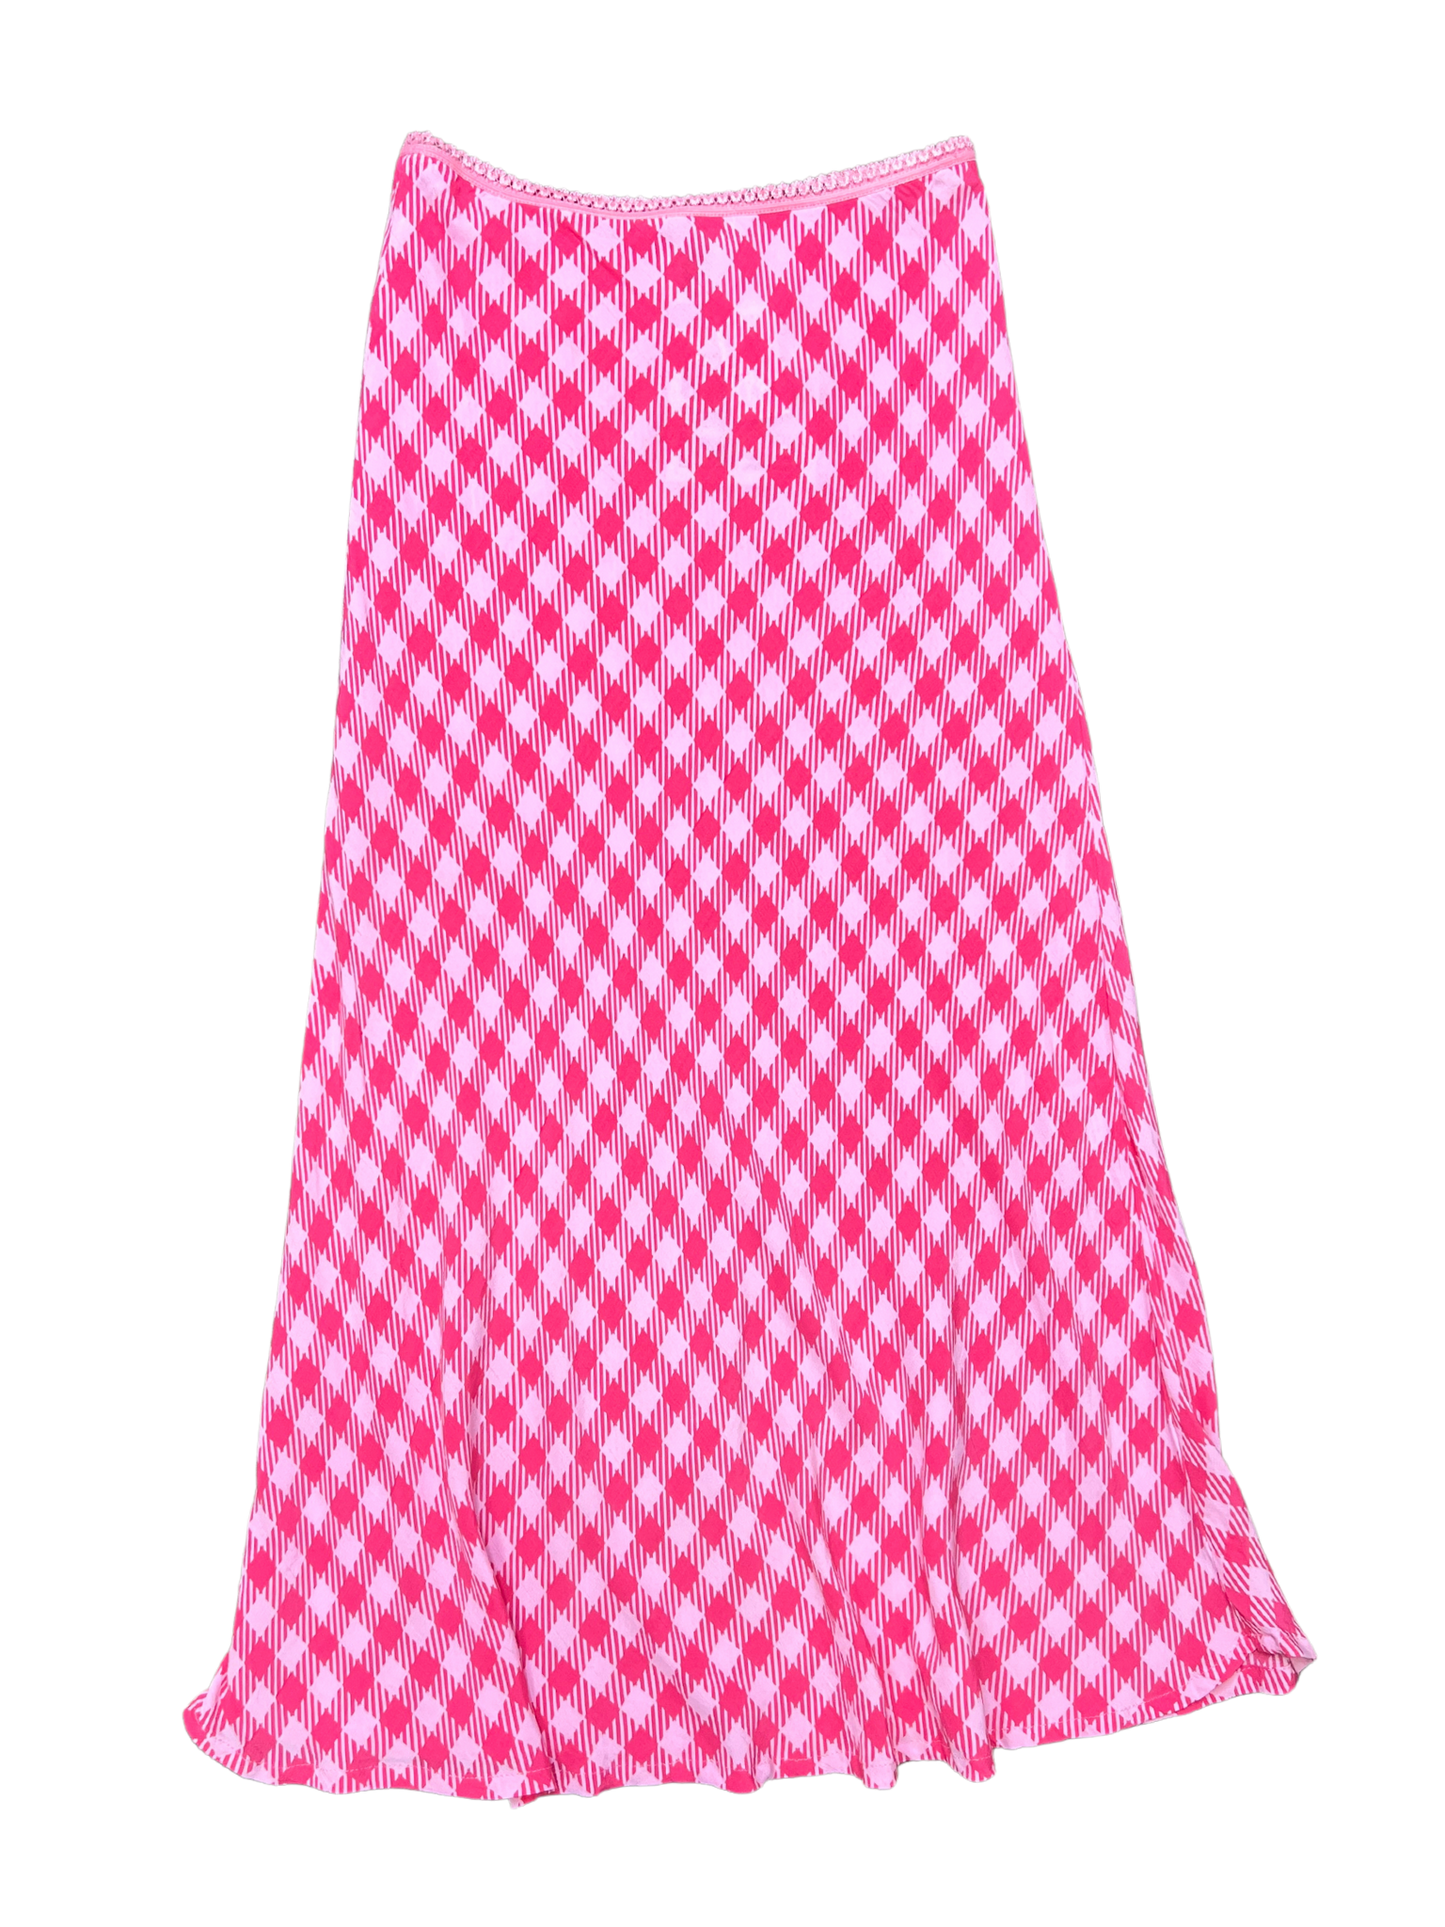 Size S - Emma Mulholland on Holiday Pink Diamond Skirt